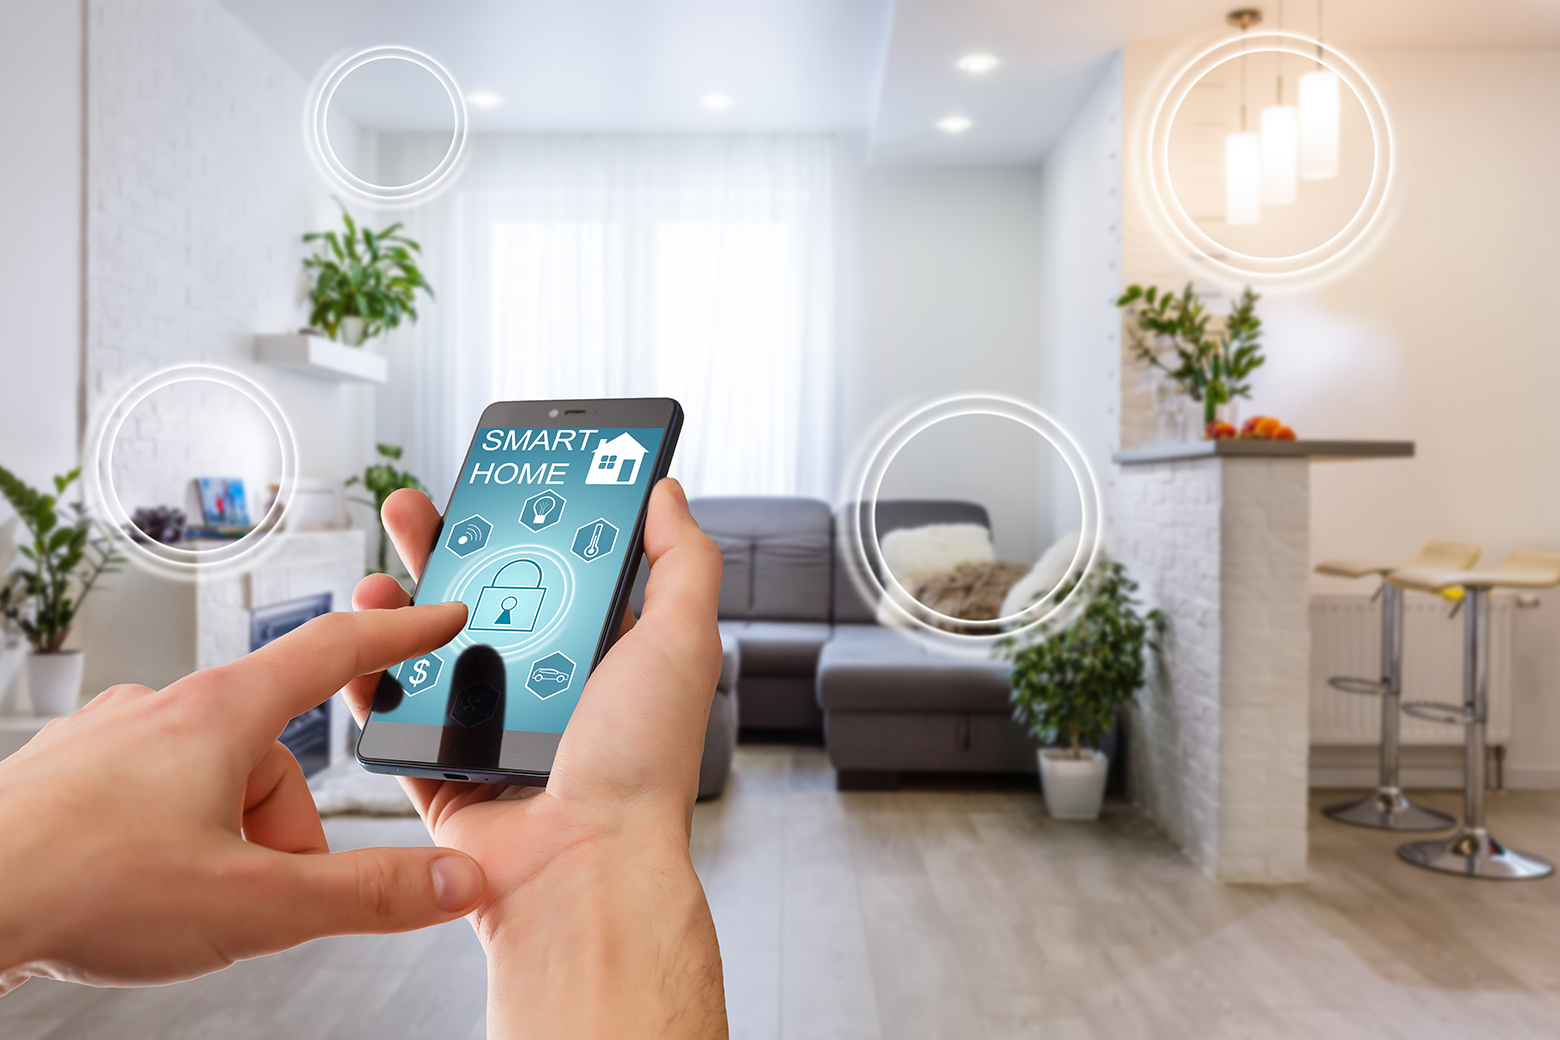 New standard for smart home tech .